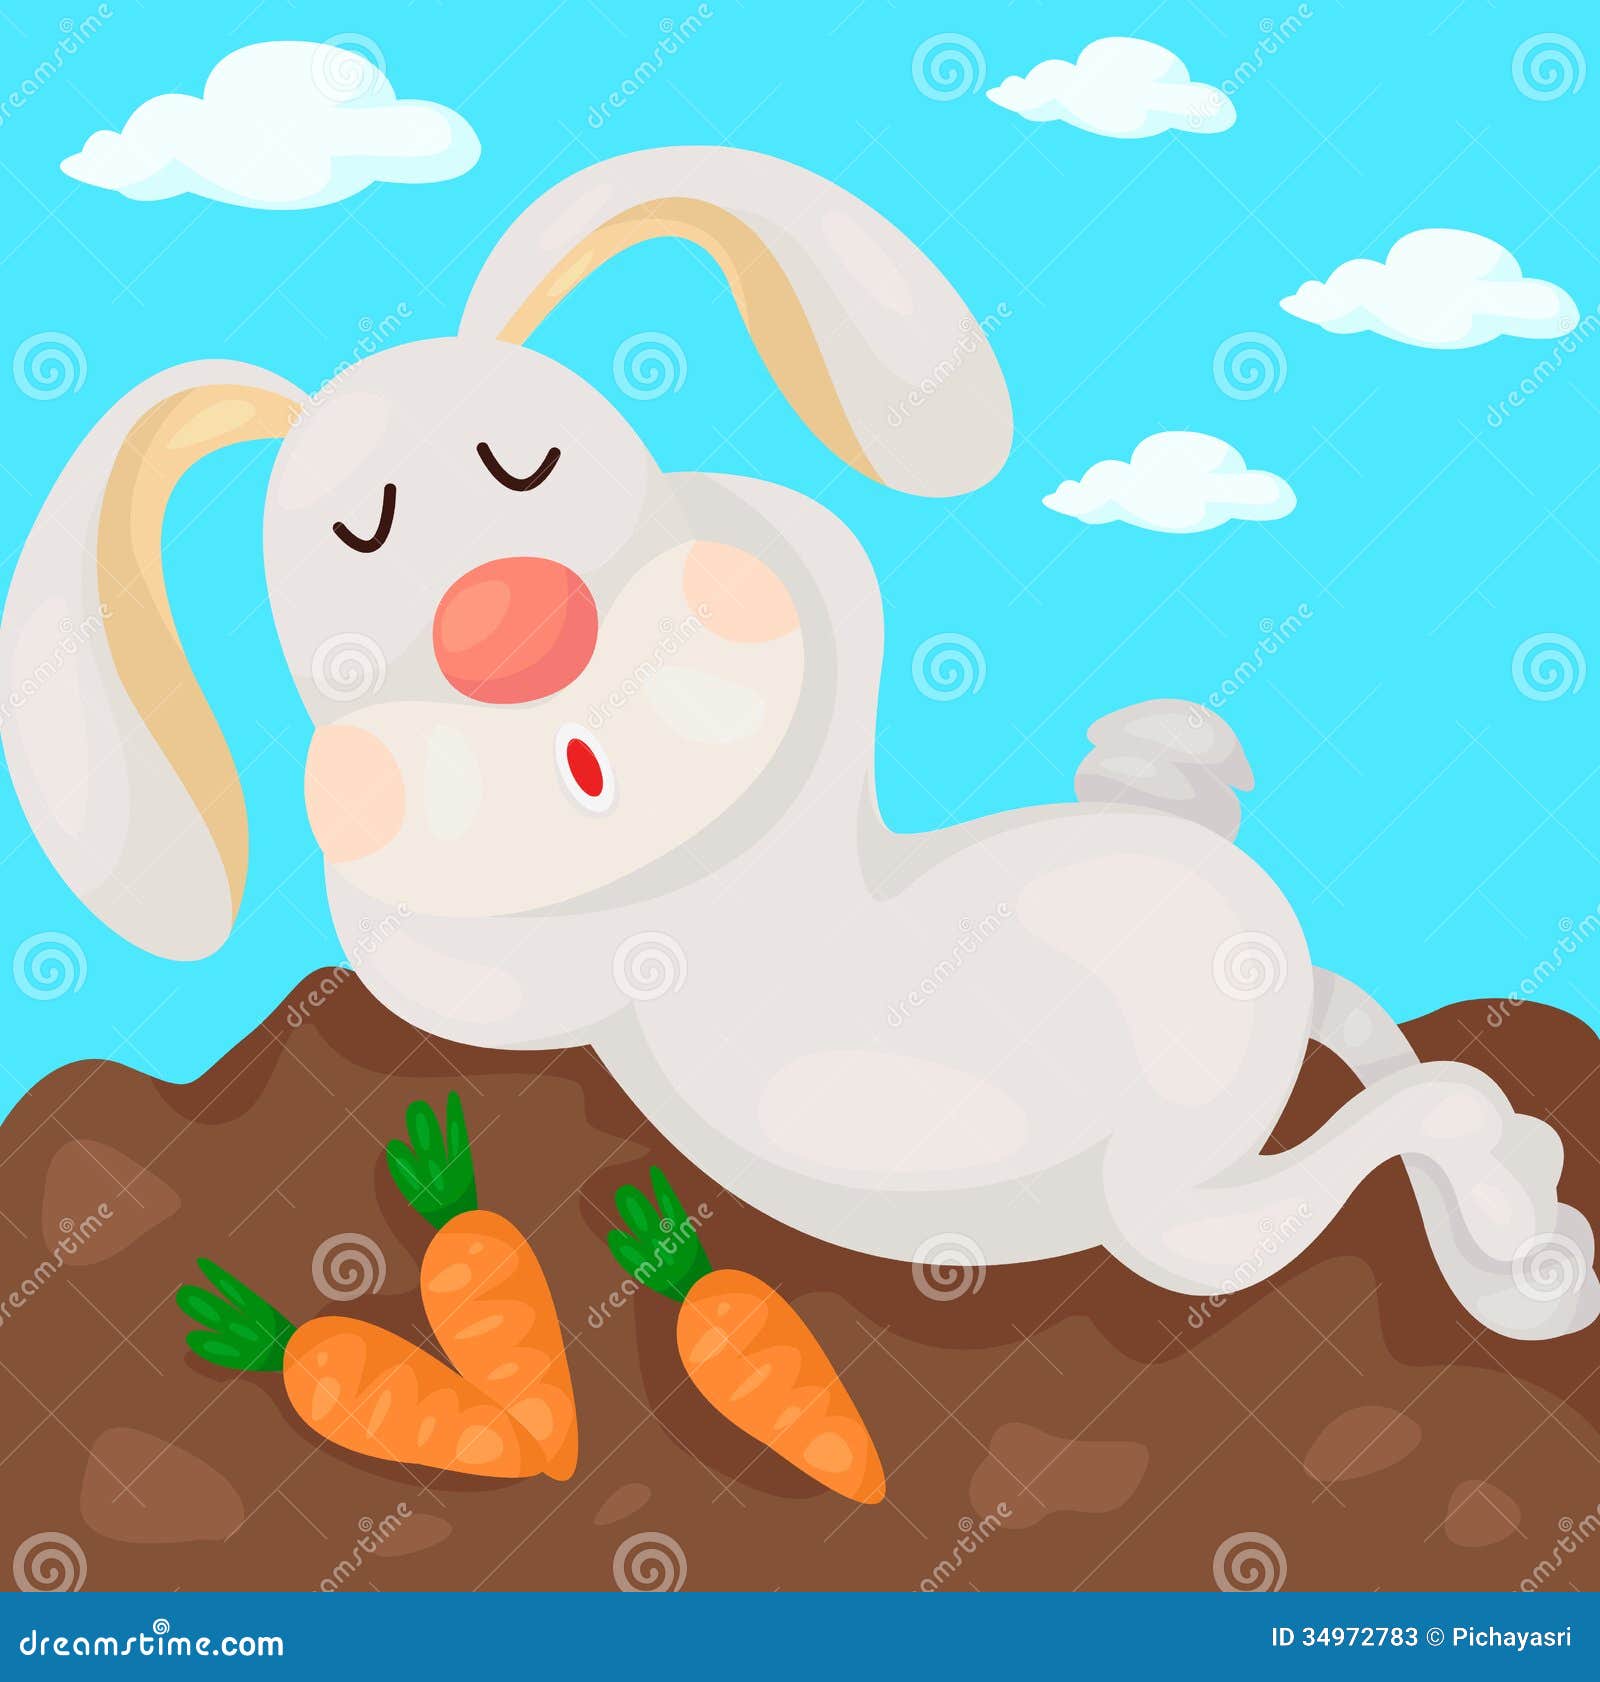 Illustration of cartoon rabbit sleeping.